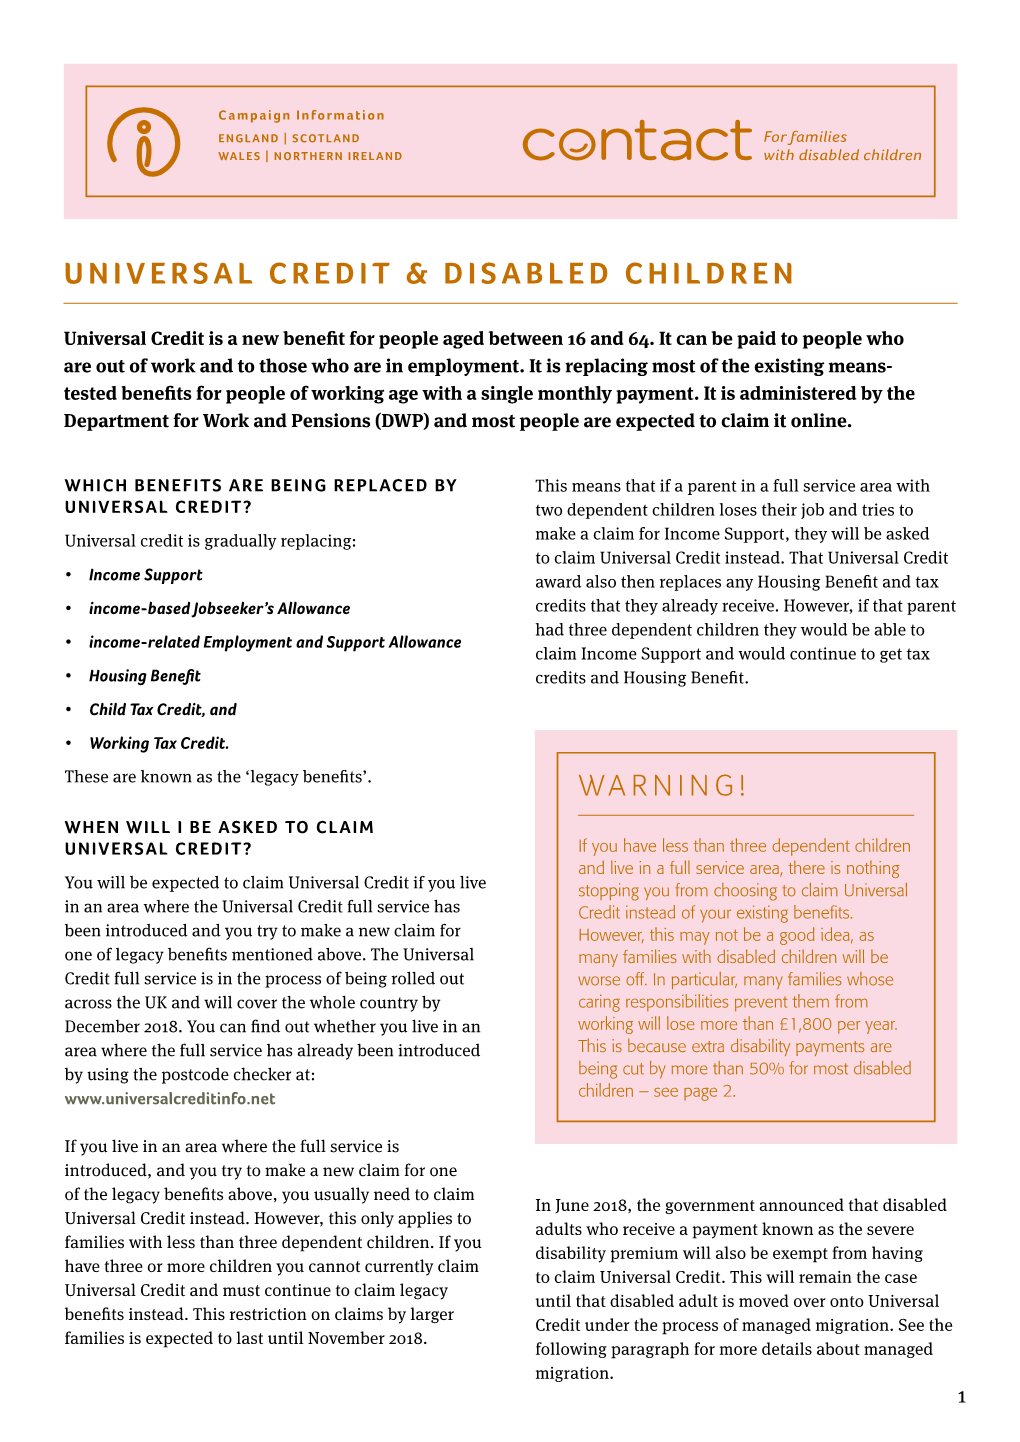 Universal Credit & Disabled Children Warning!